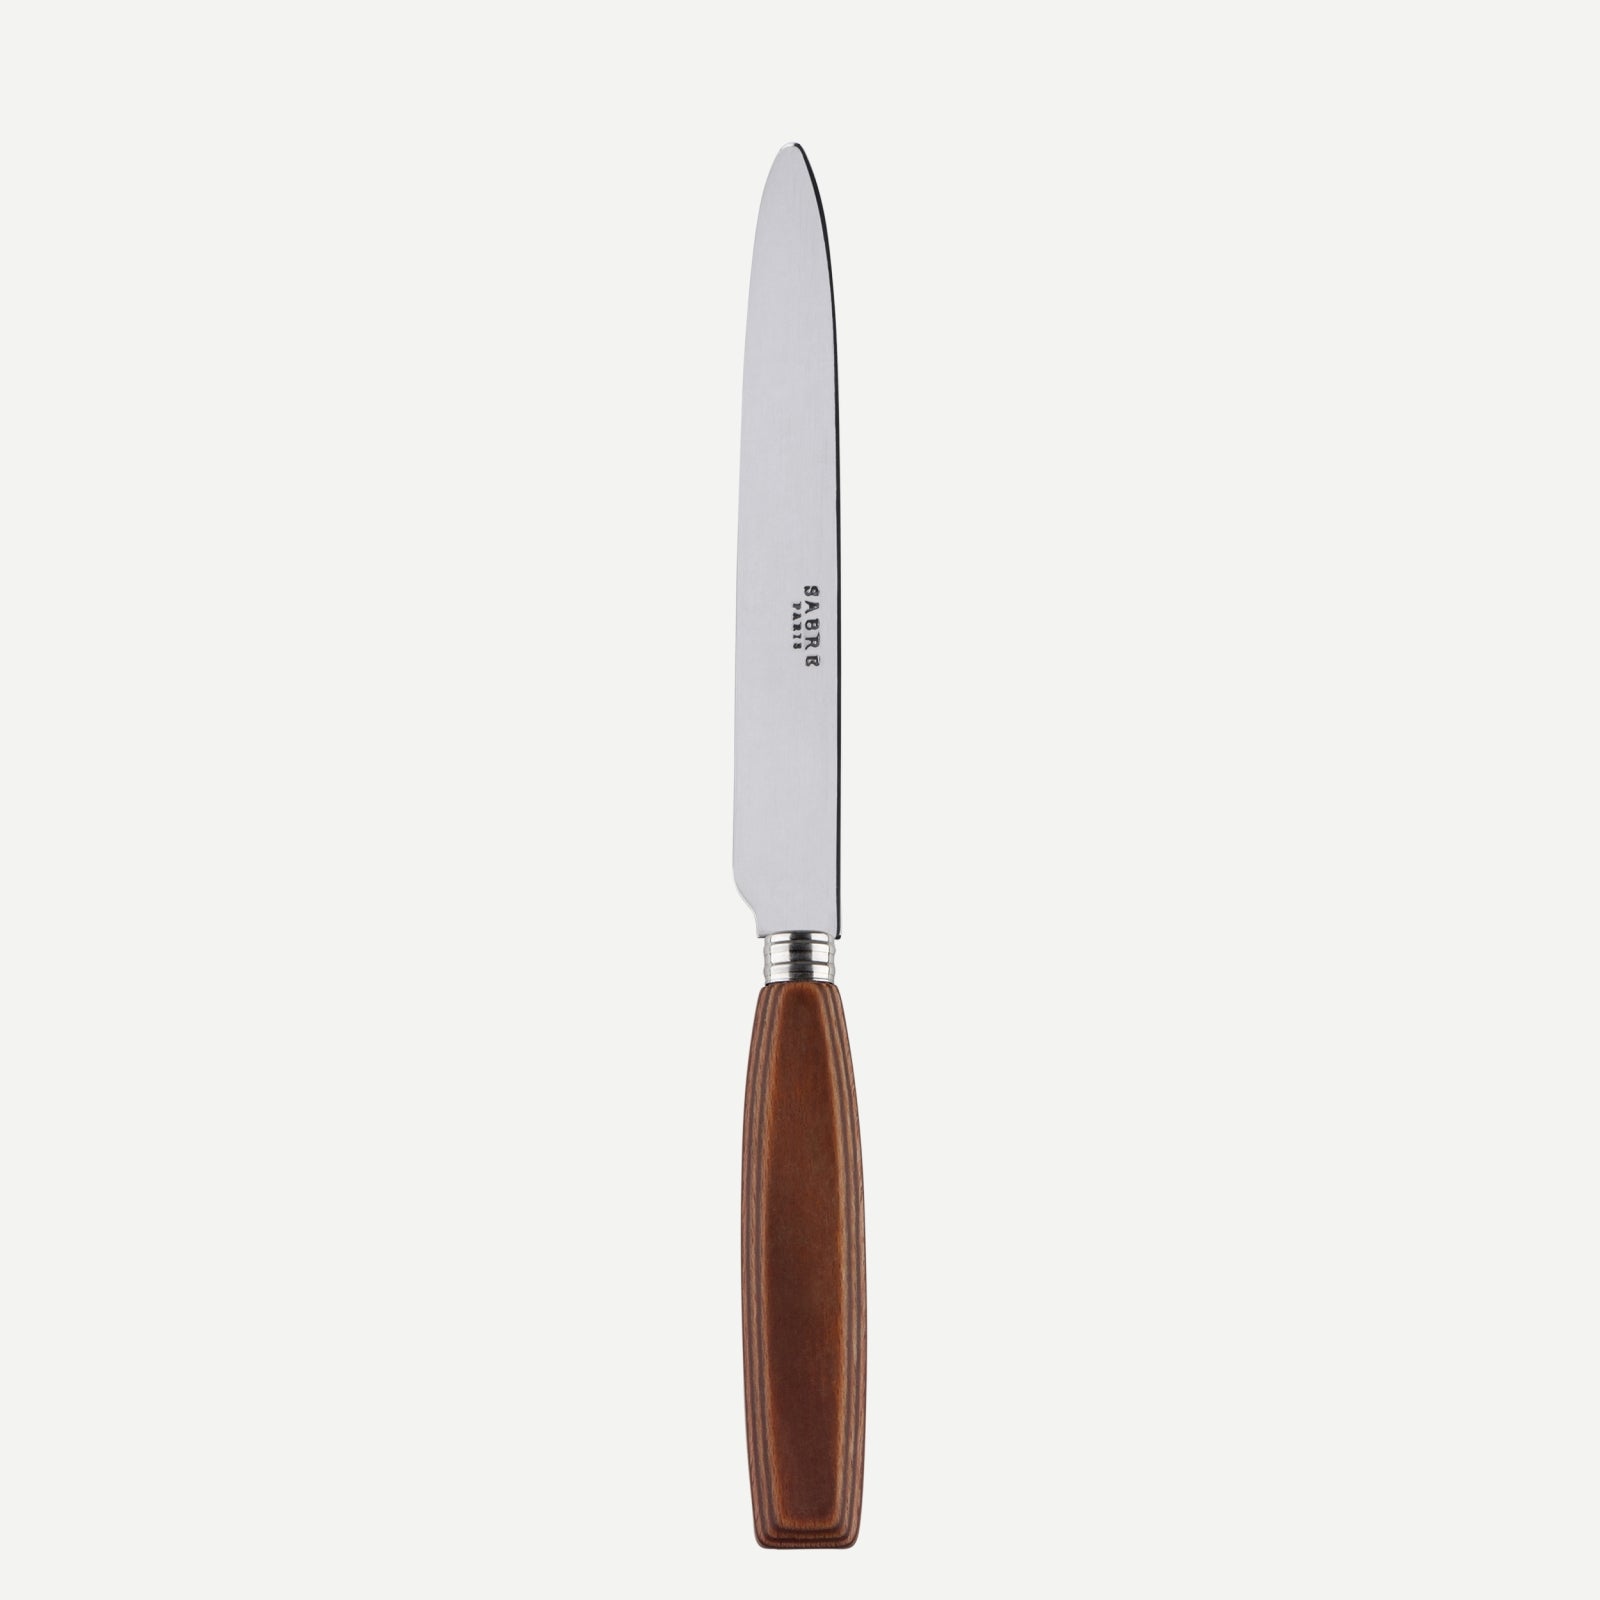 Dinner knife - Djembe - Light press wood